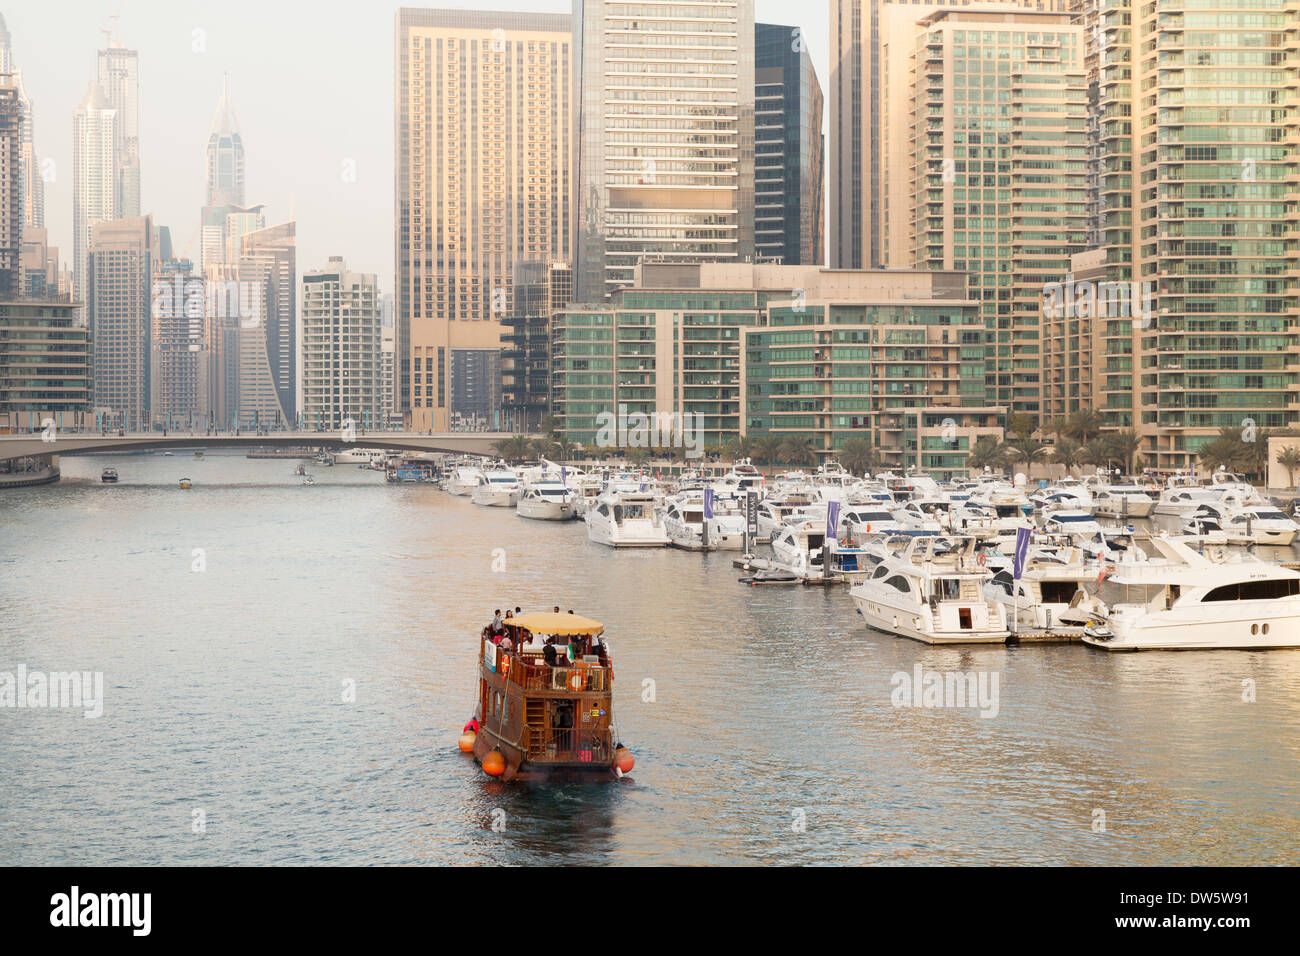 A wooden tourist tour boat, Dubai Marina, UAE, United Arab Emirates Middle East Stock Photo